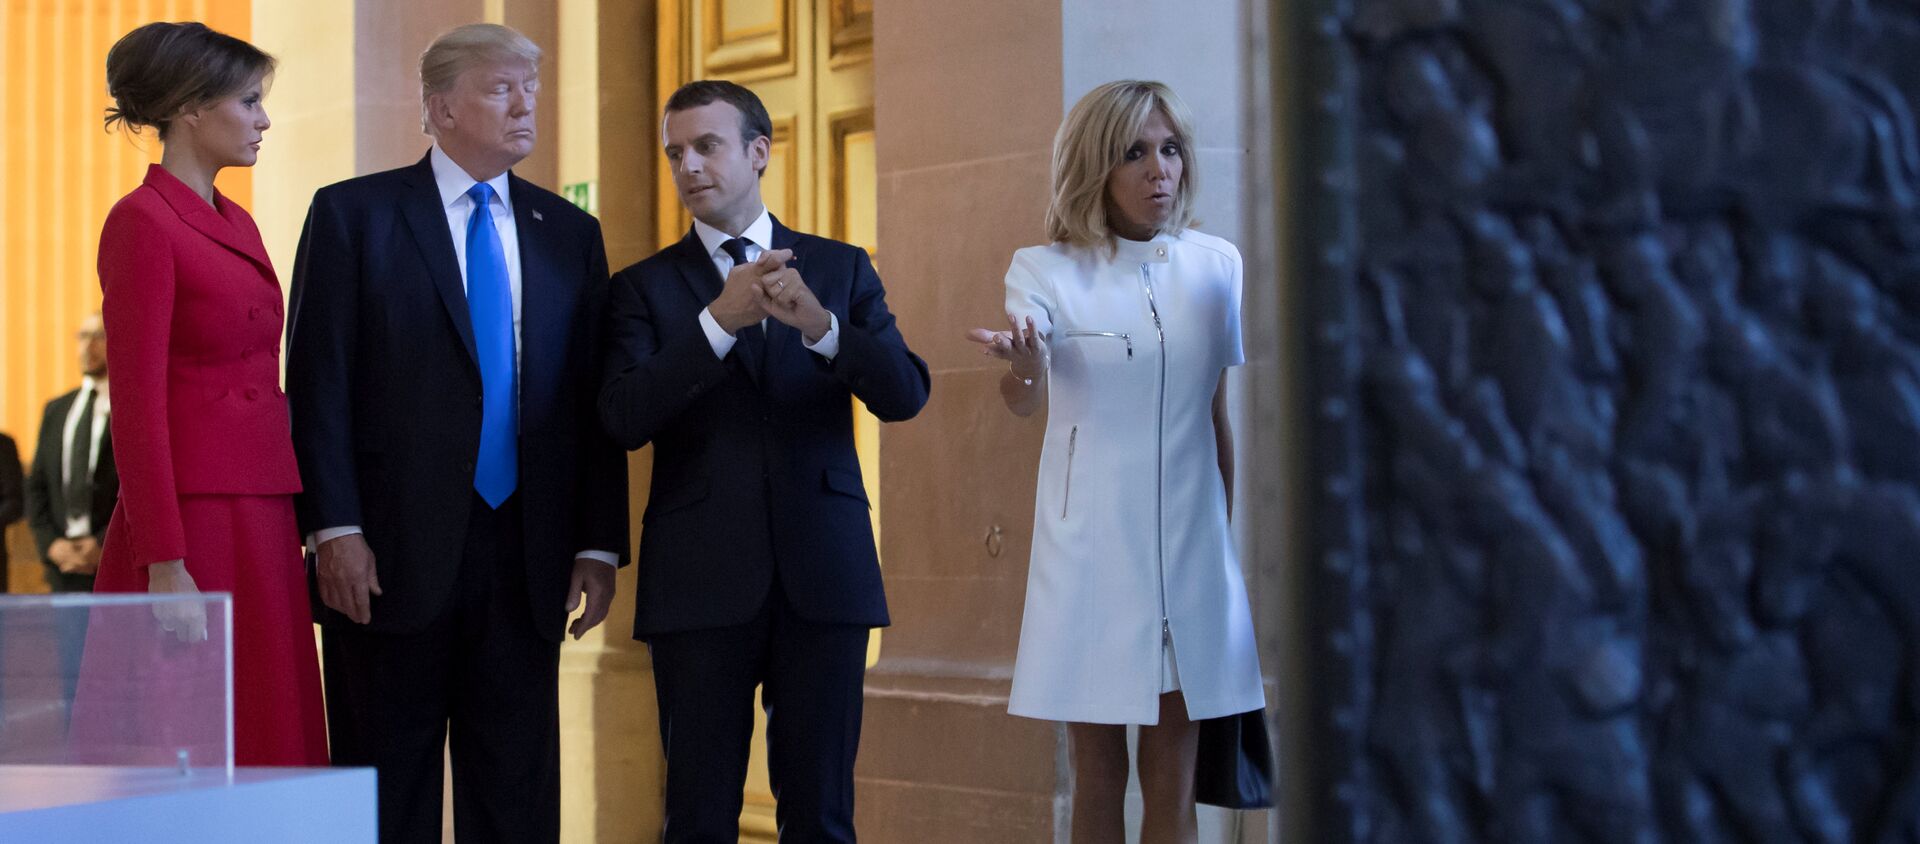 Emmanuel Macron - Brigitte Trogneux - Donald Trump - Melania Trump - Sputnik Türkiye, 1920, 14.07.2017